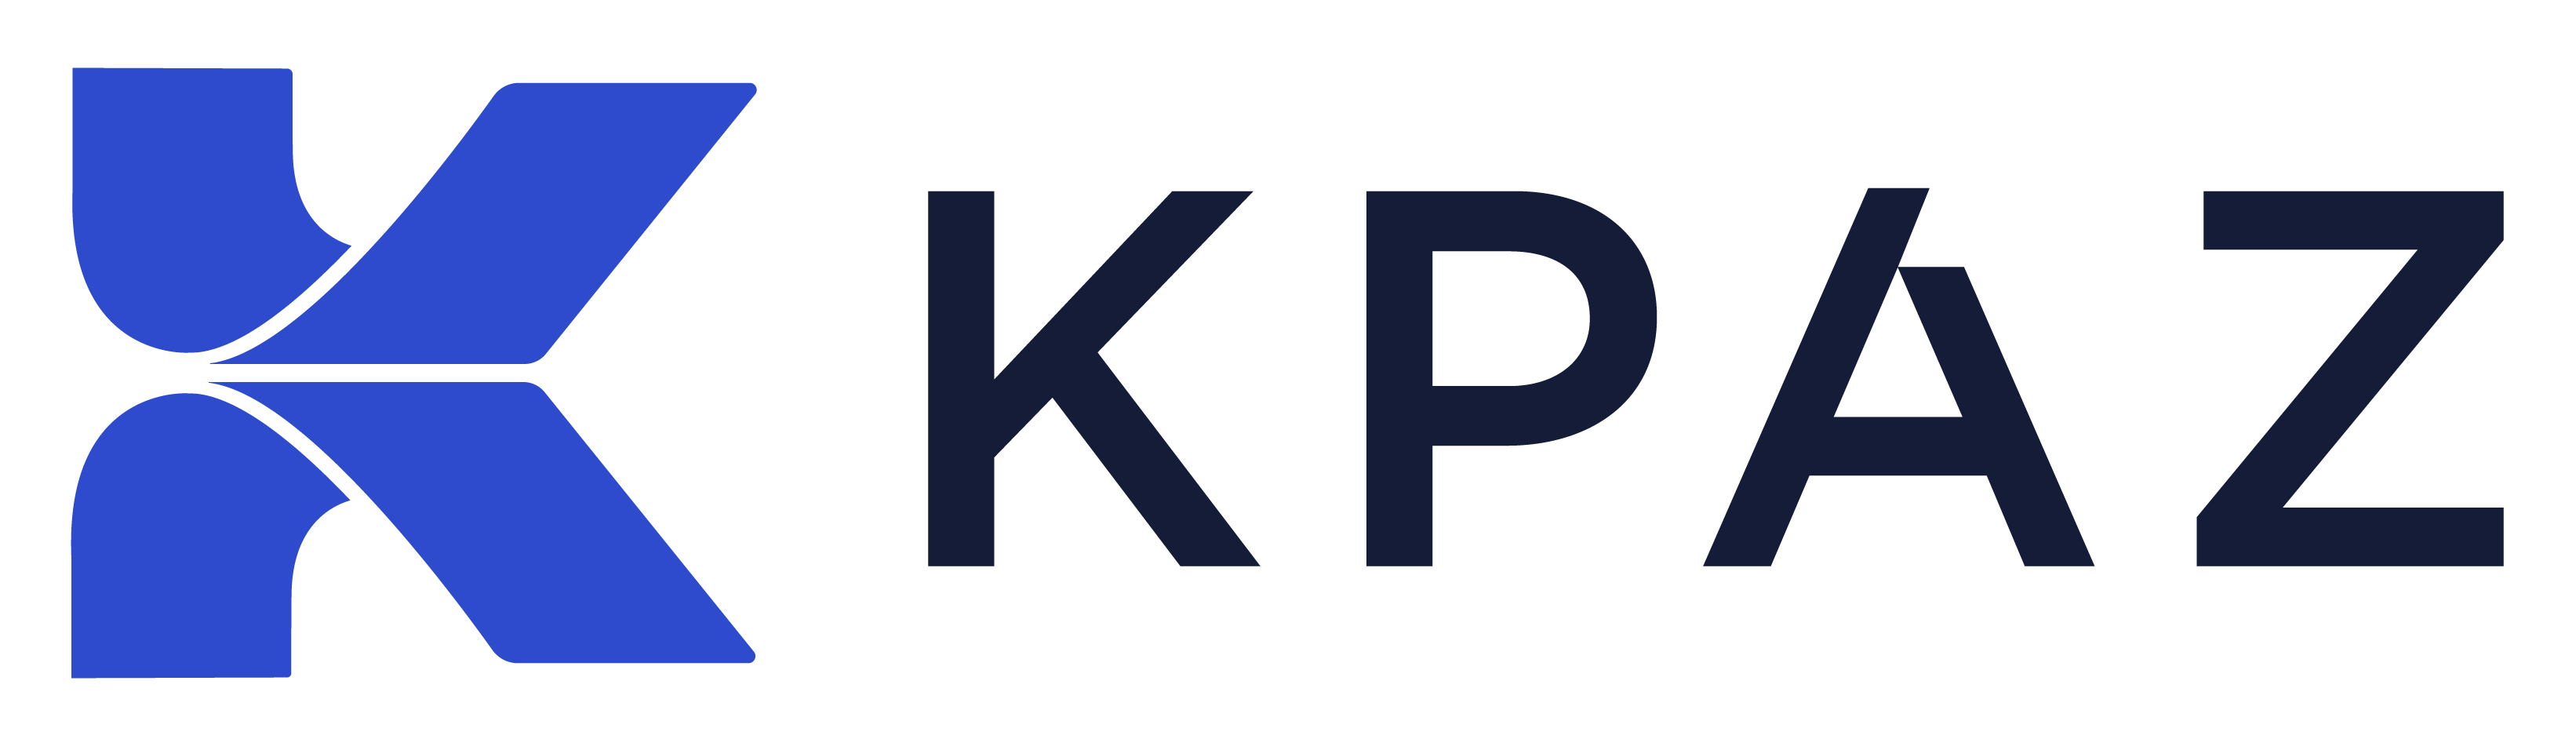 KPaz Consultores logo